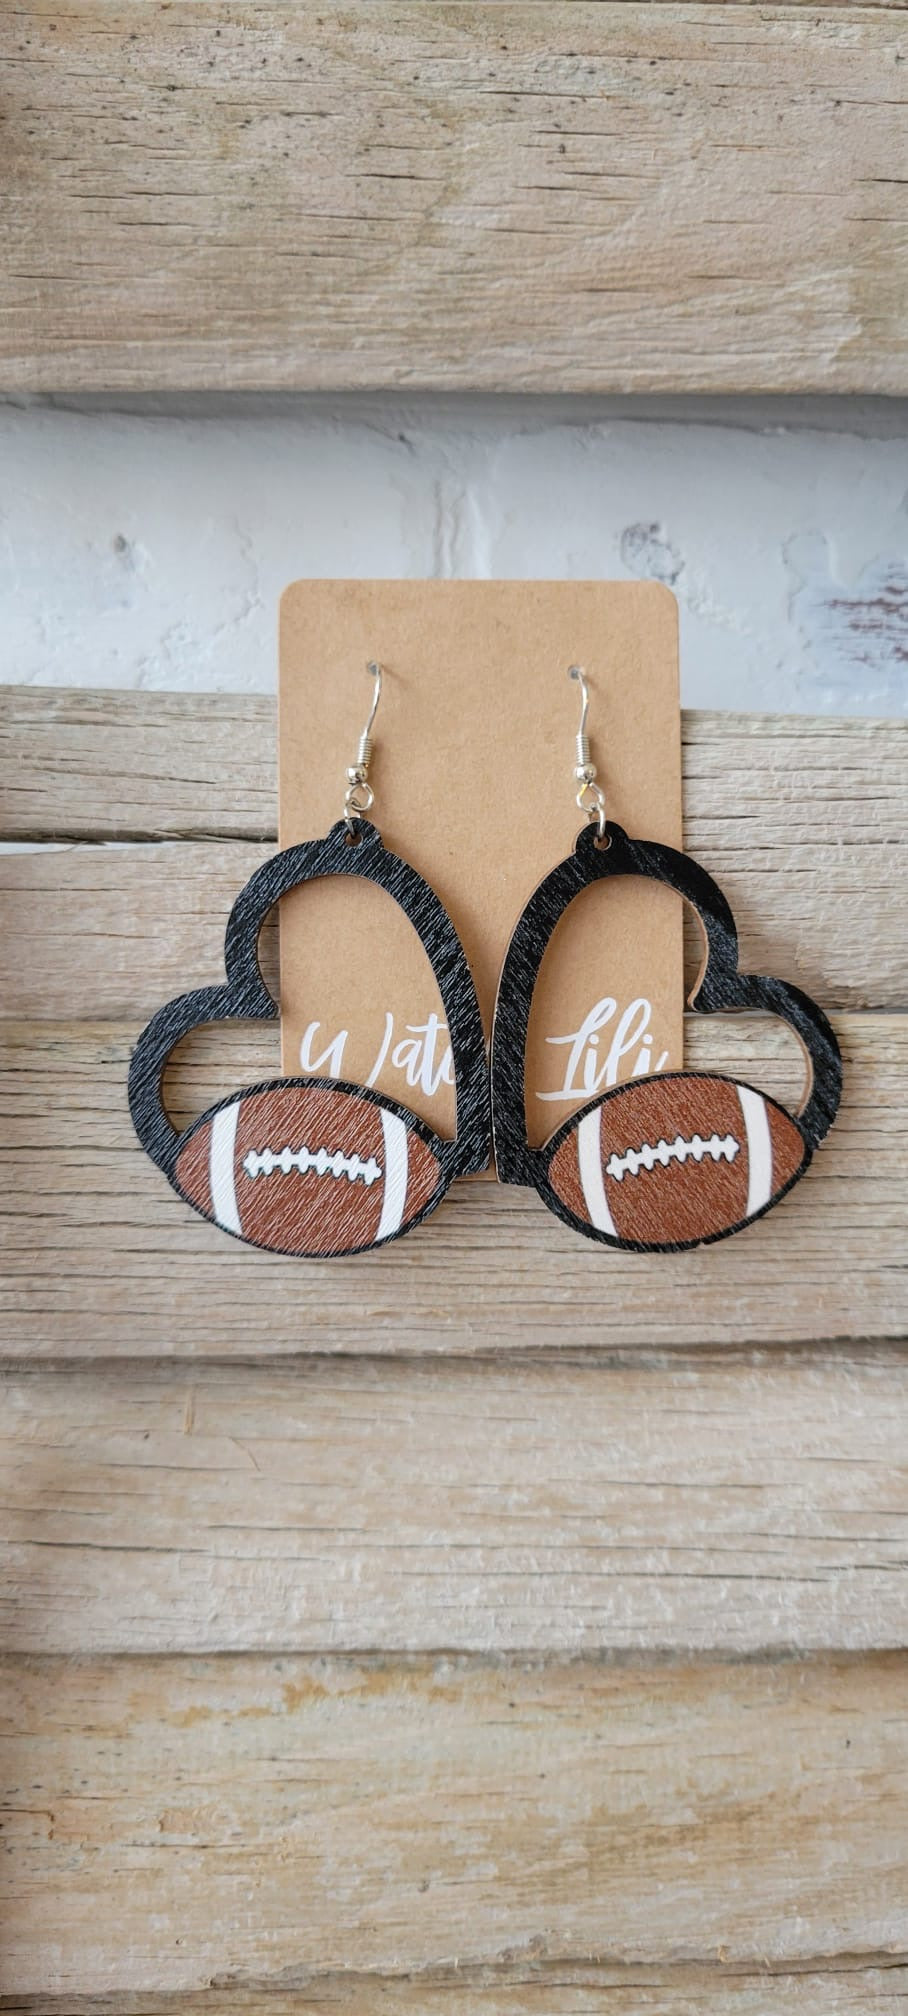 I love football earrings